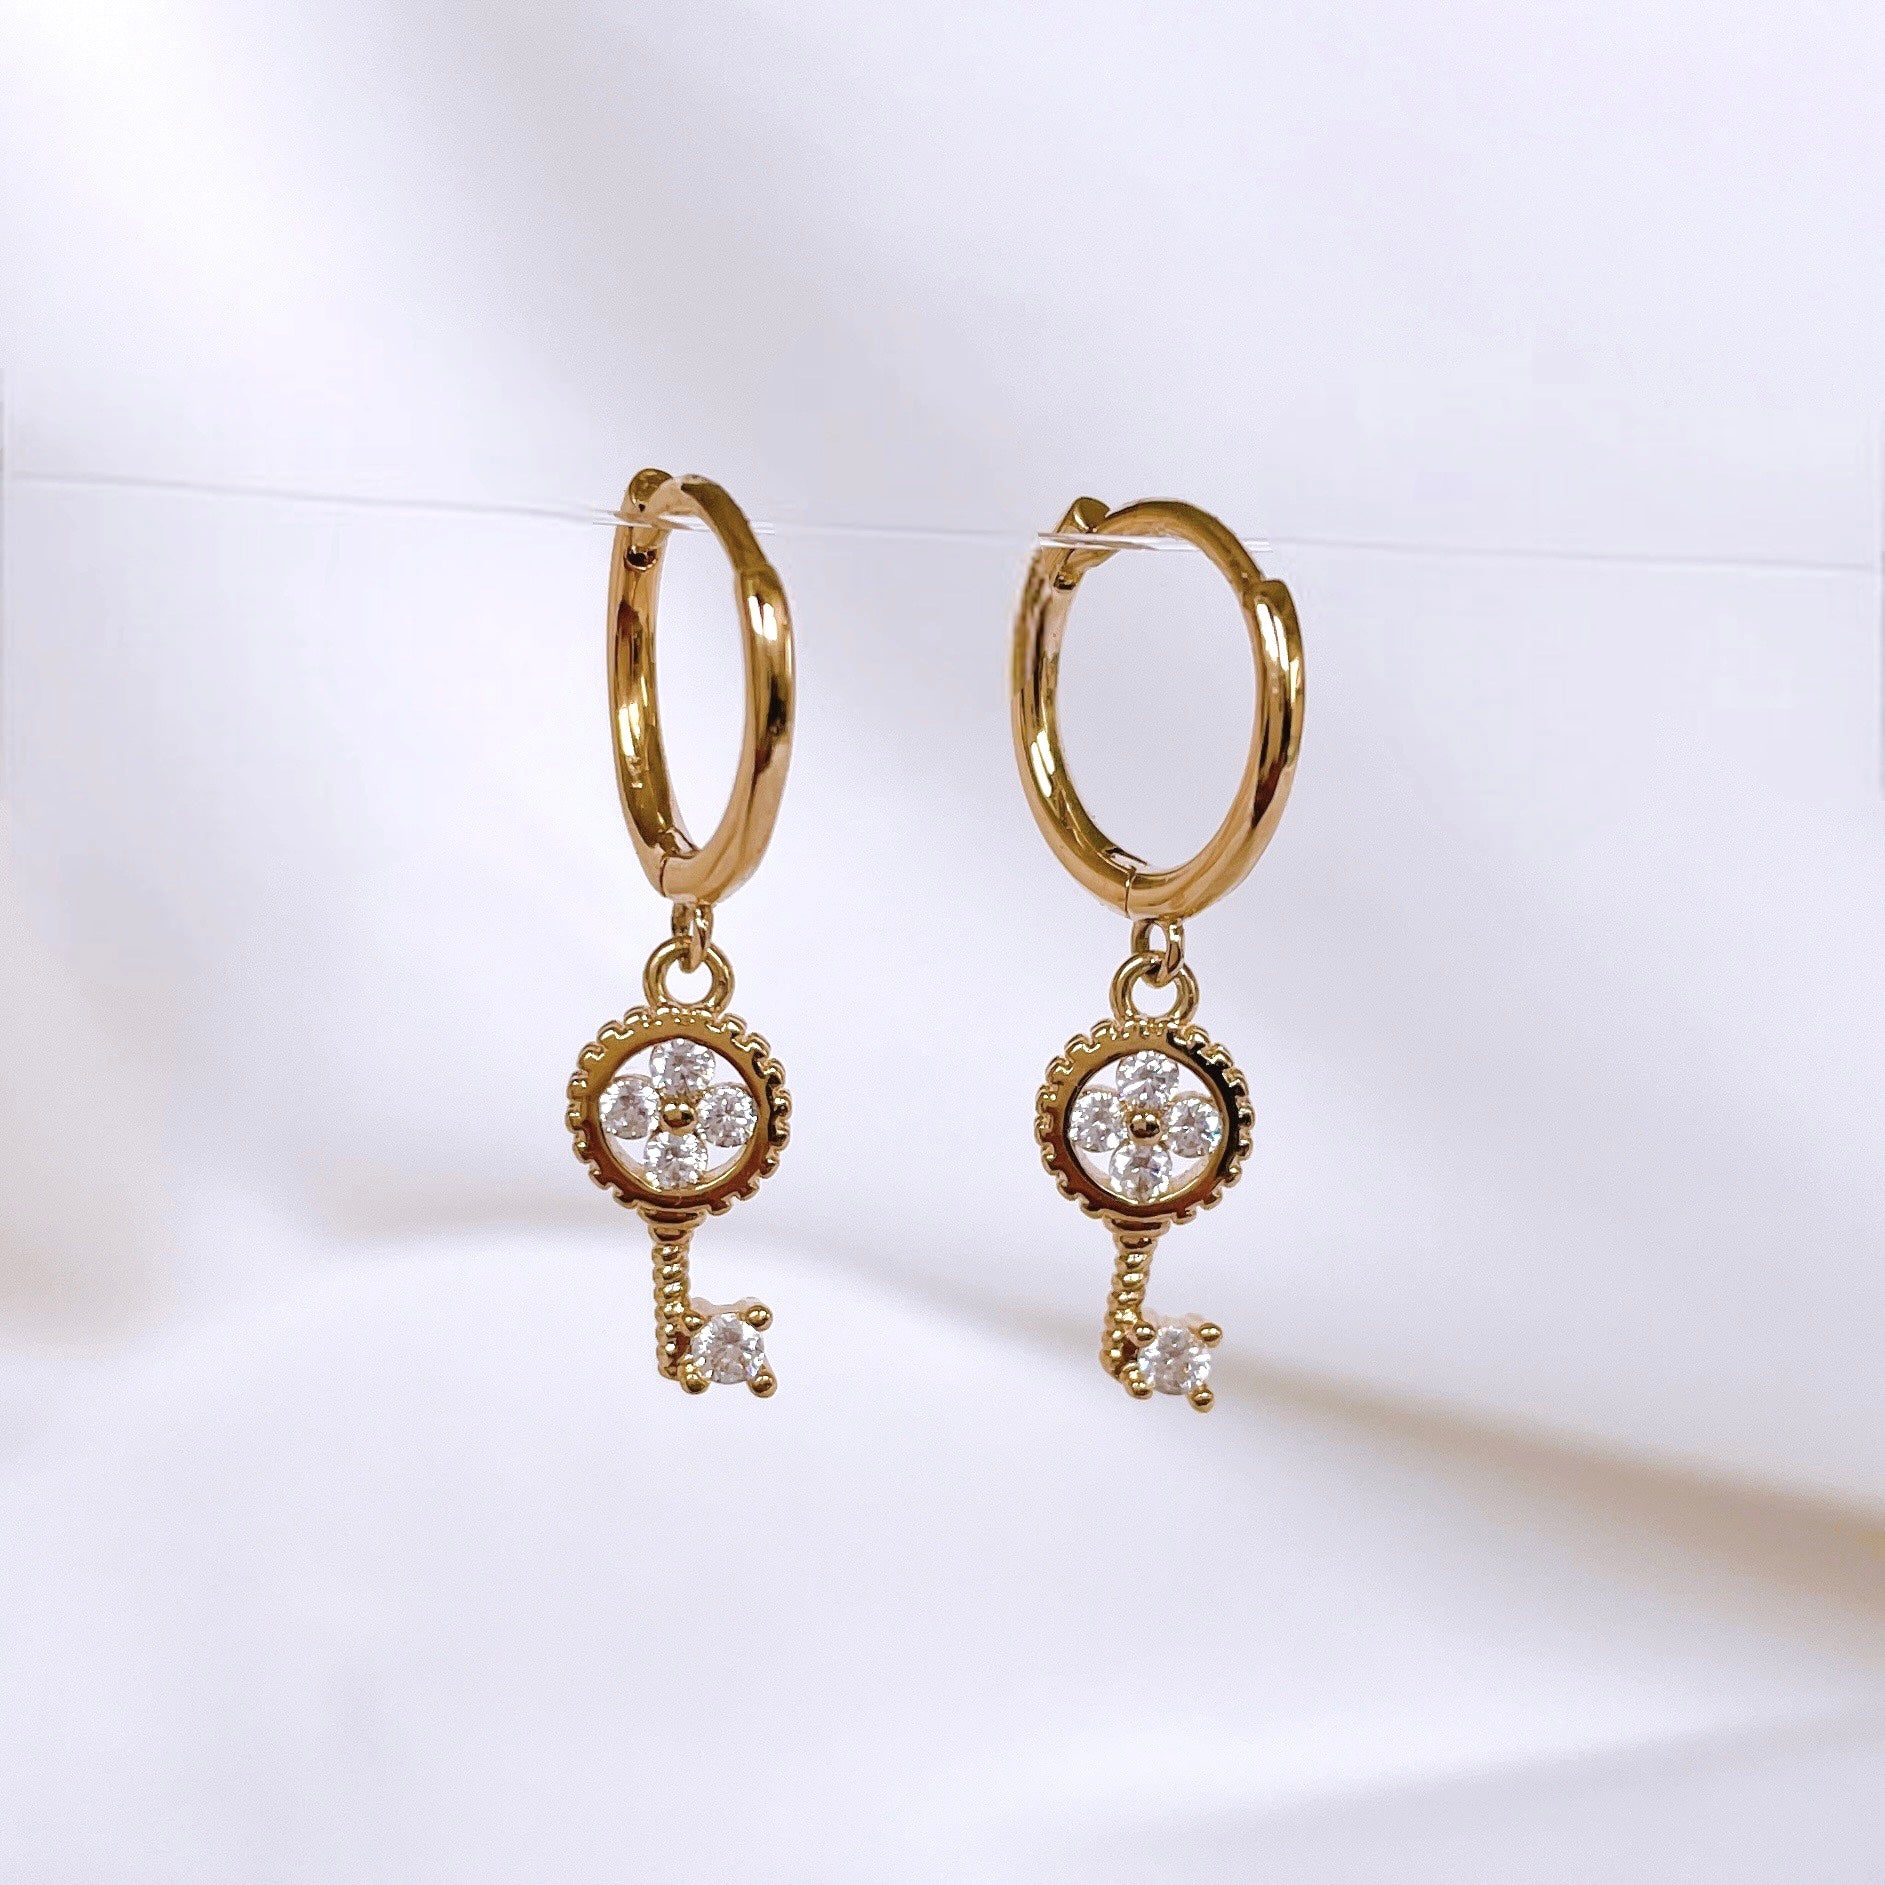 Gold-plated “Keys” earrings